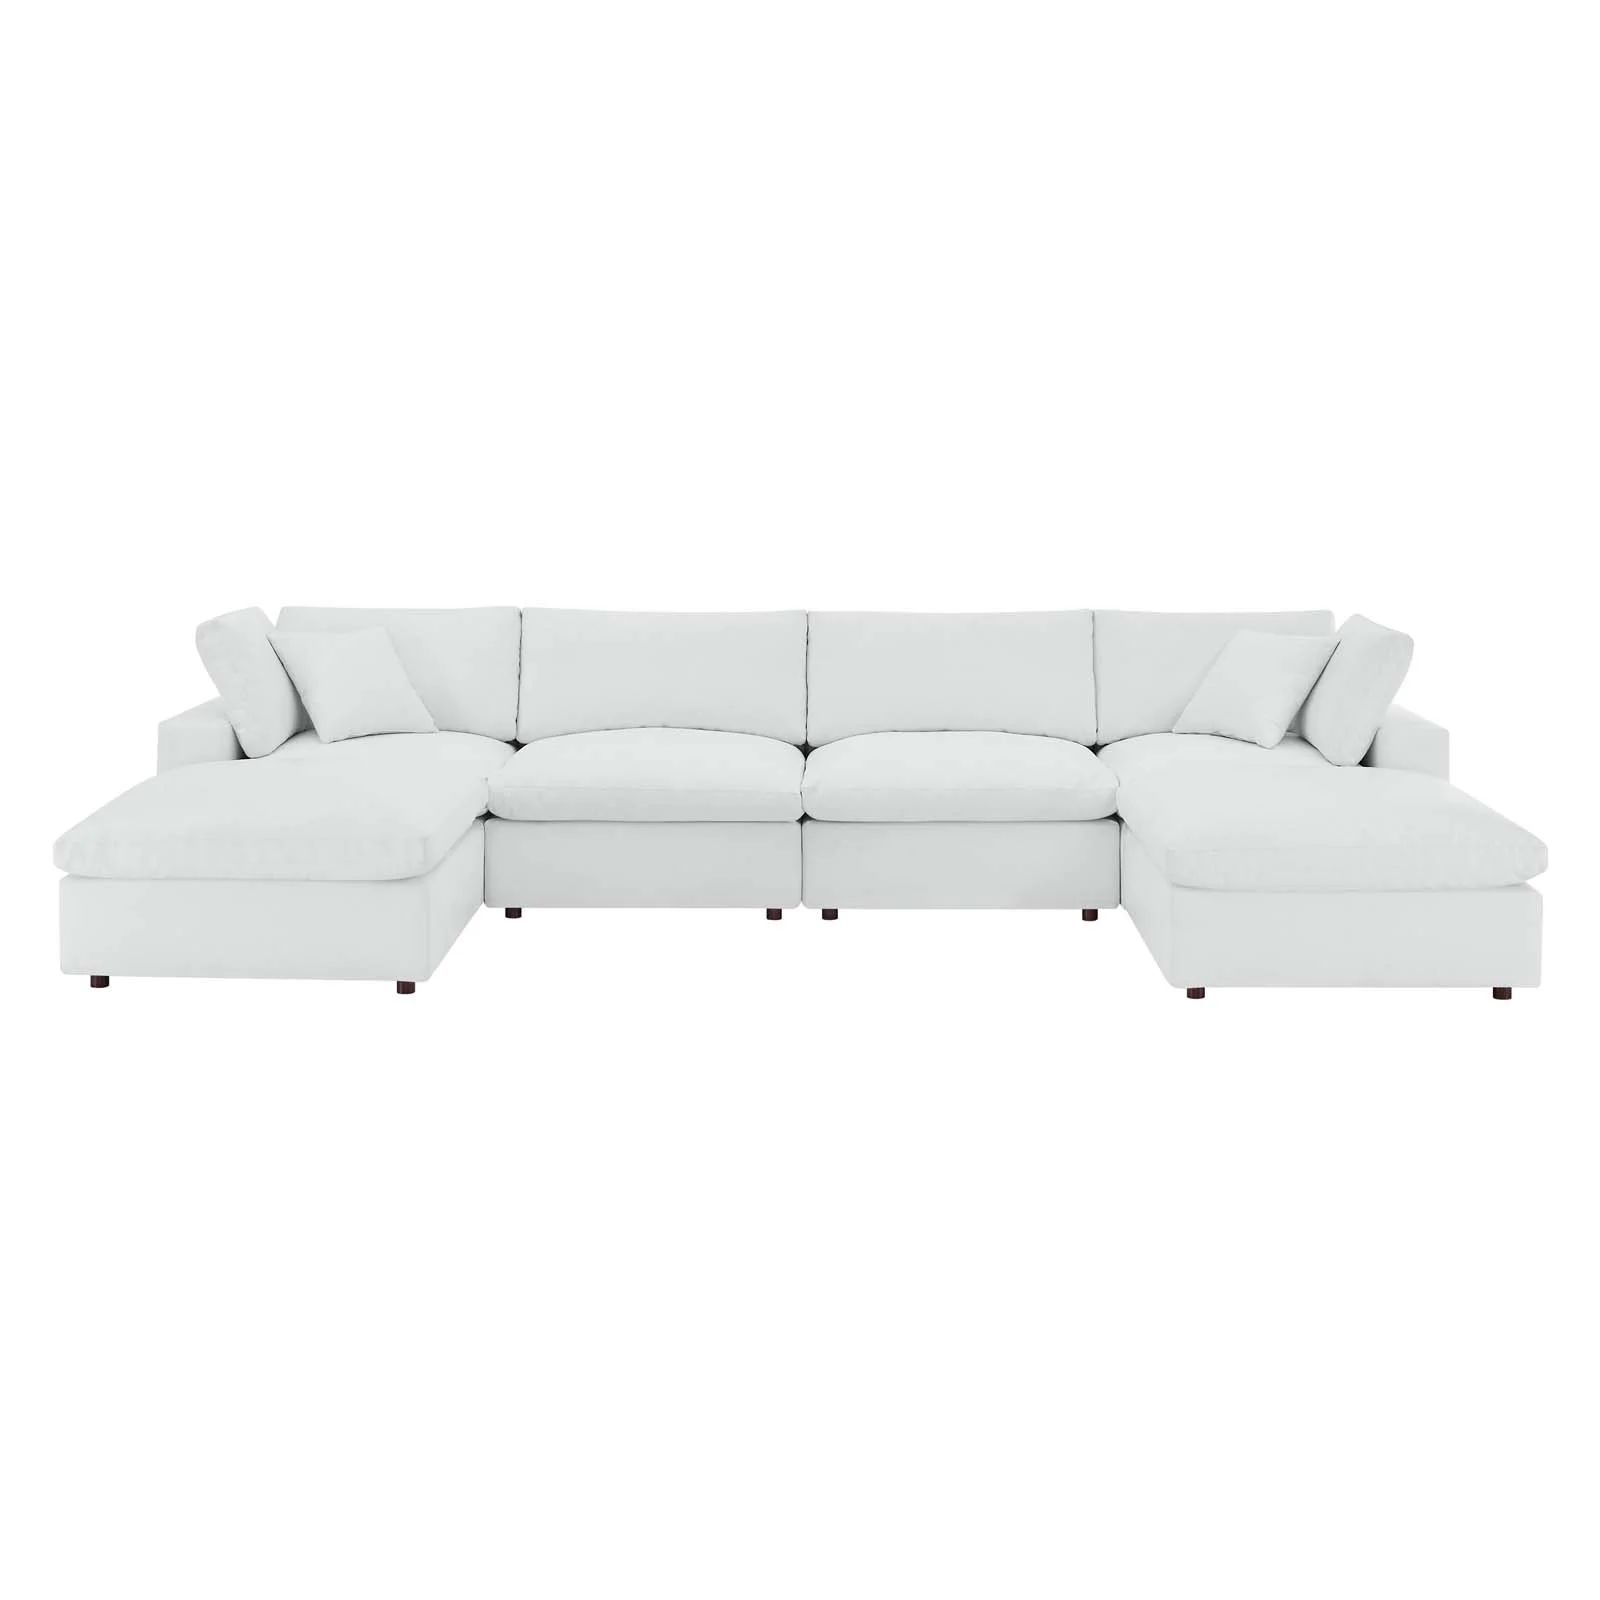 Sectional Sofa Set, Faux Vegan Leather, White, Modern Contemporary Urban Design, Living Lounge Ro... | Walmart (US)